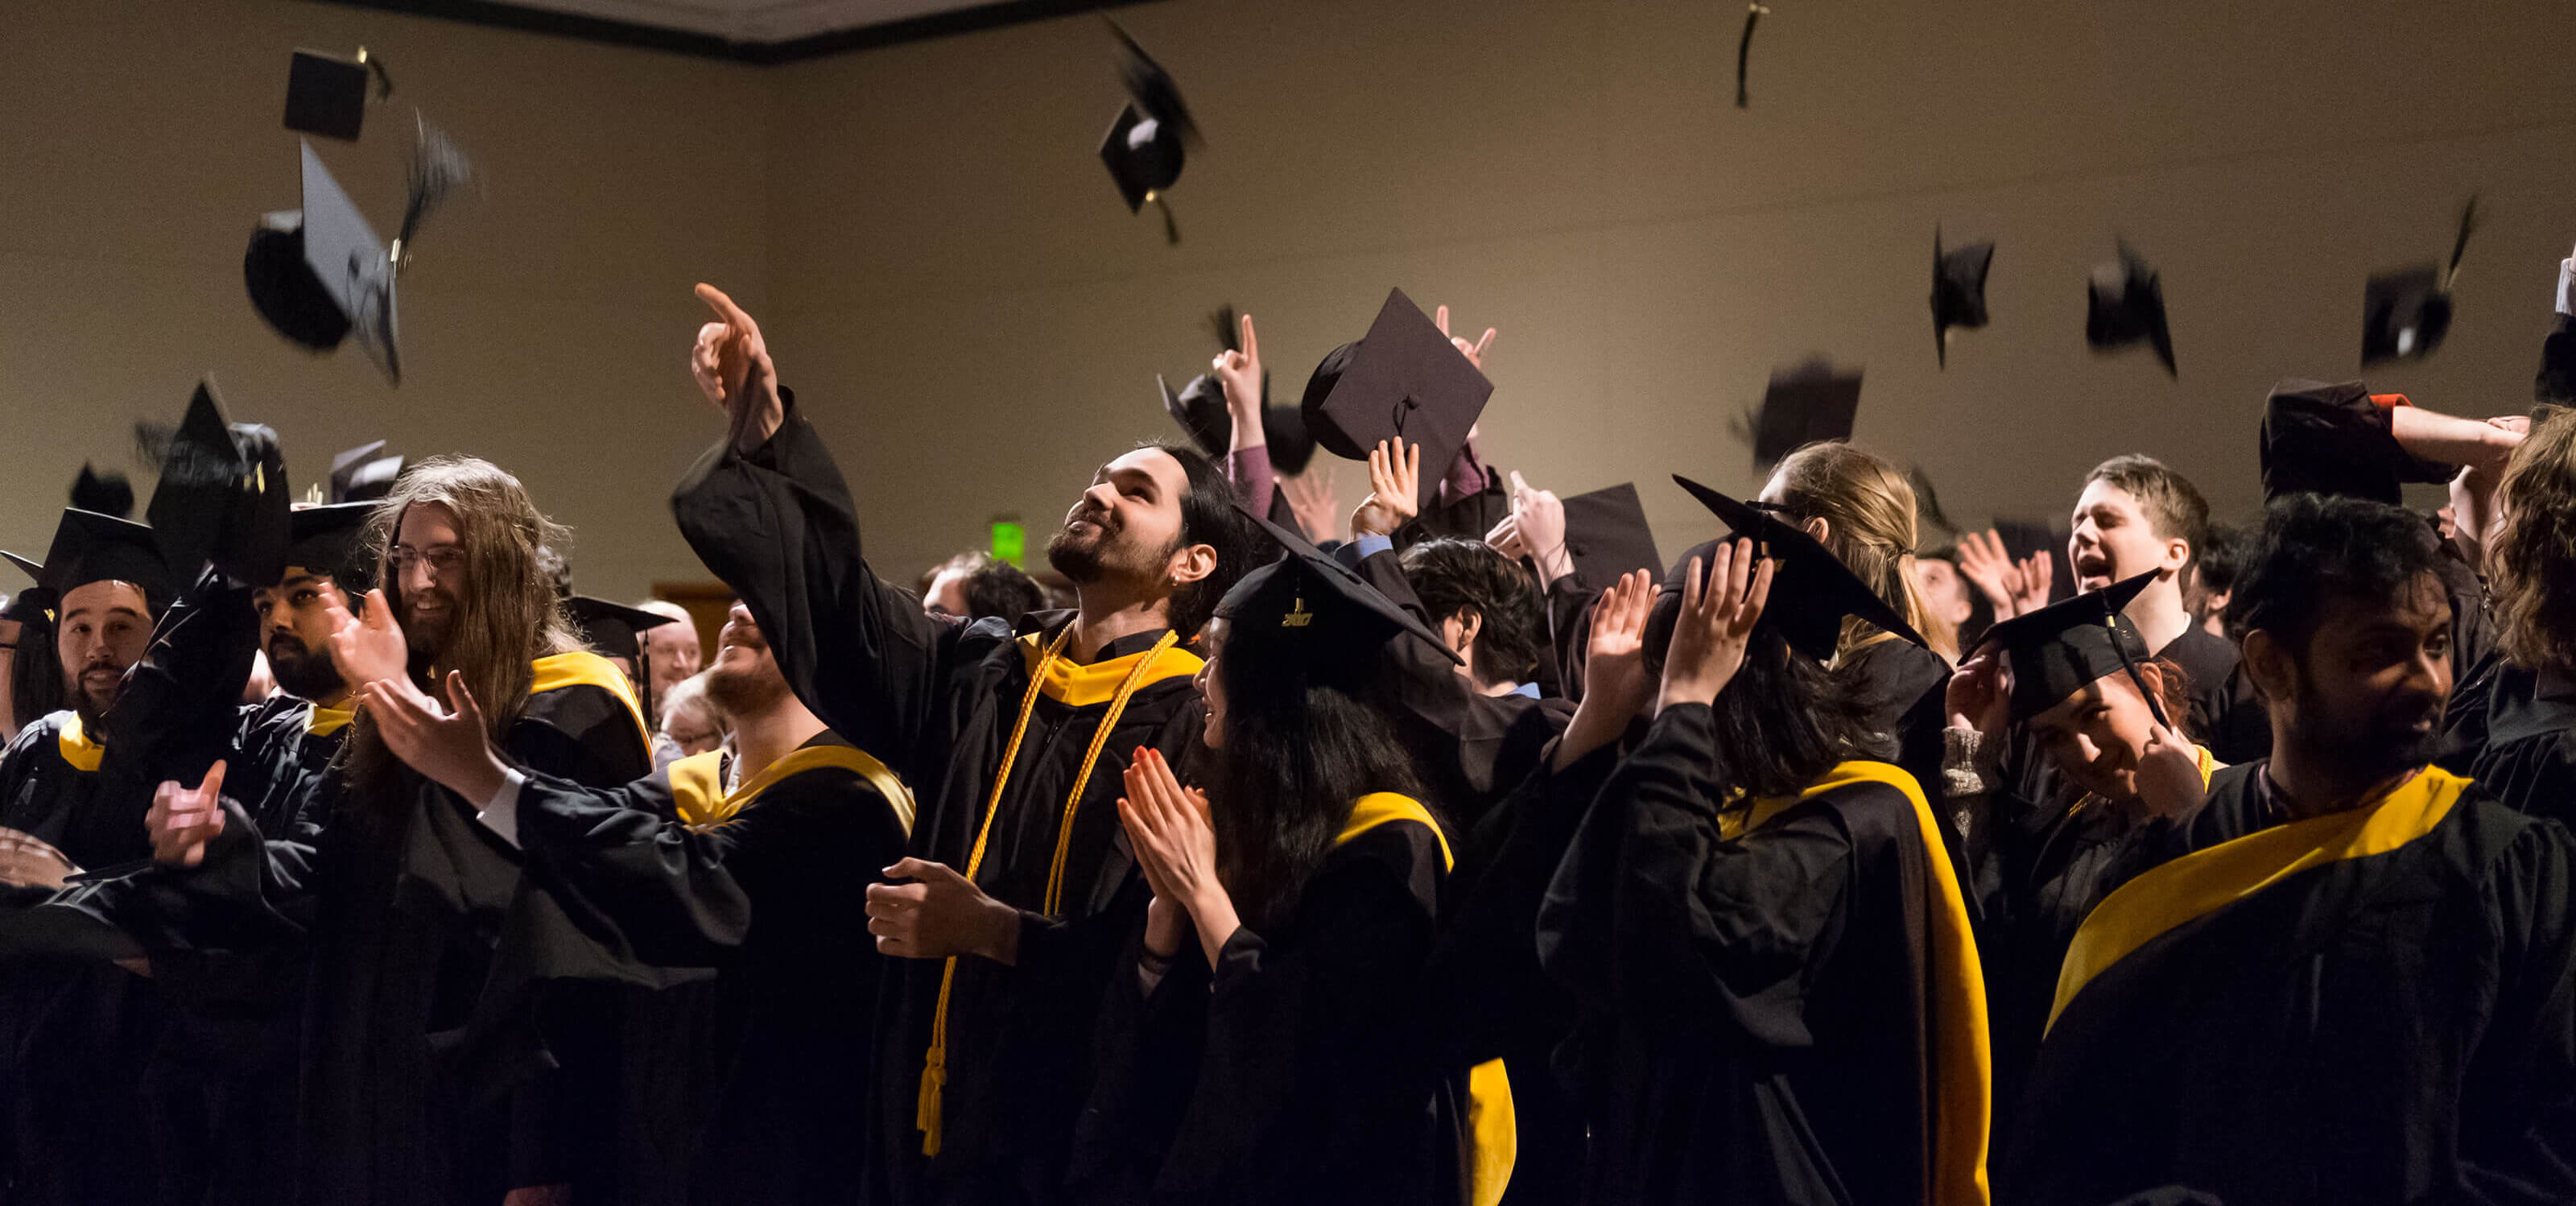 DigiPen 2017 graduates toss their caps in the air